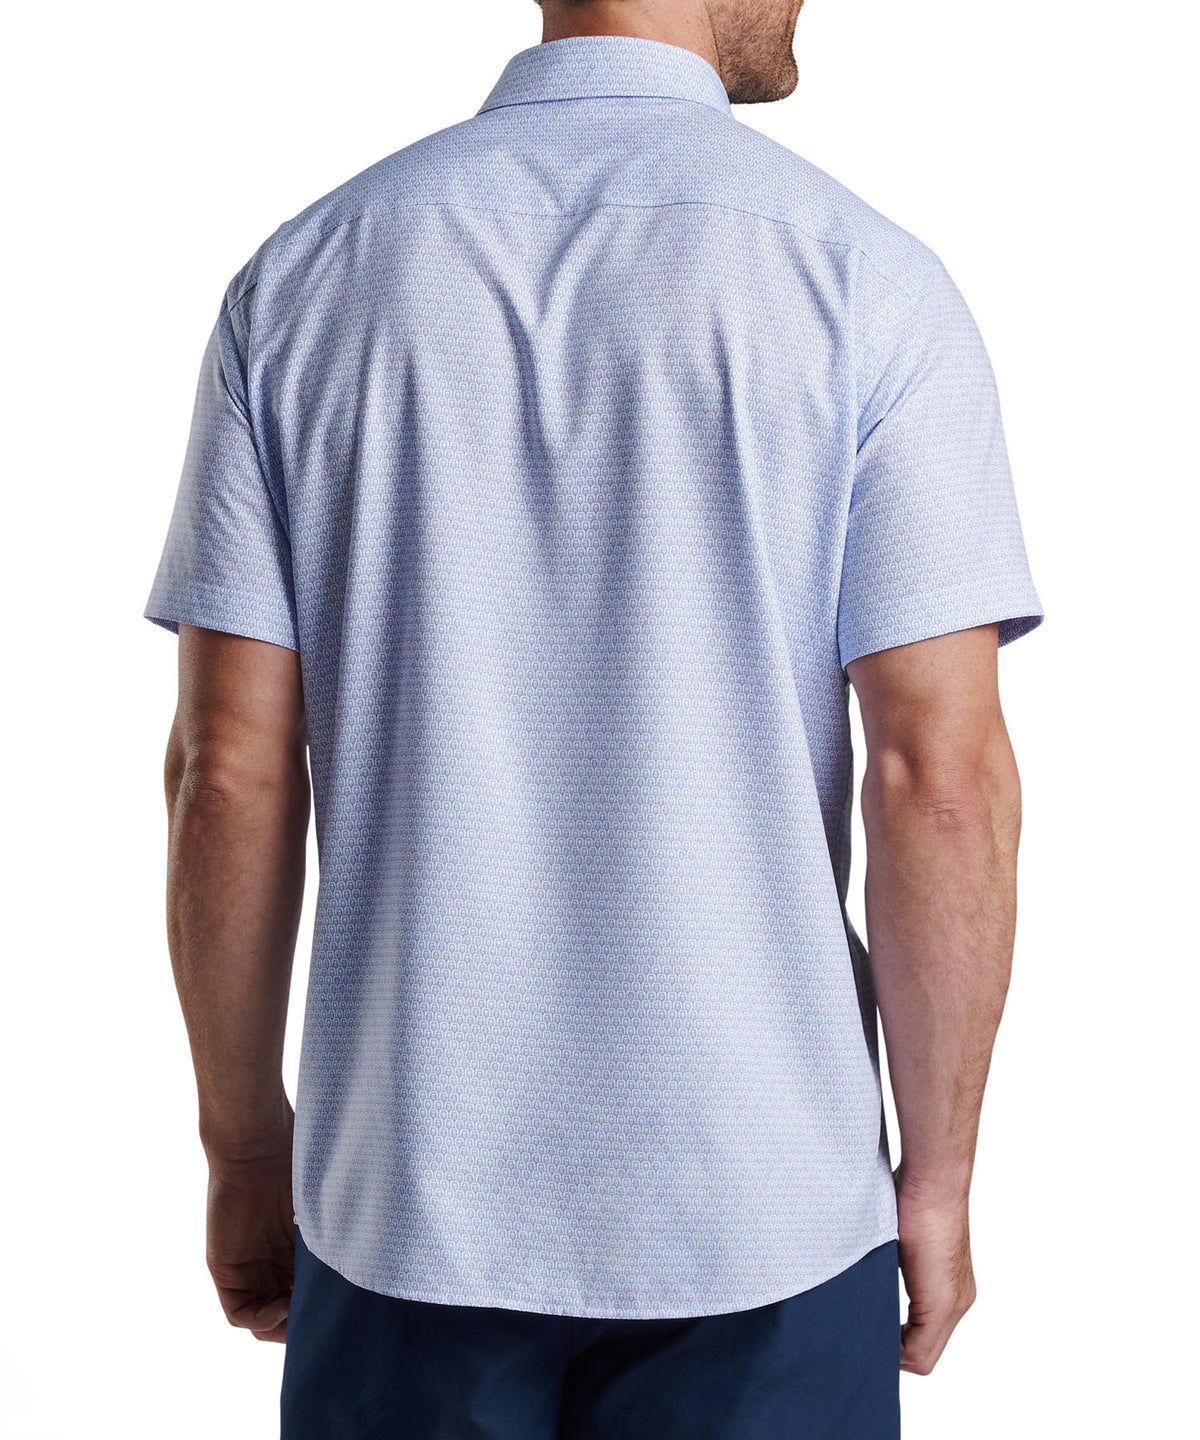 Peter Millar Wine Print Short Sleeve Spread Collar Sport Shirt, Big & Tall